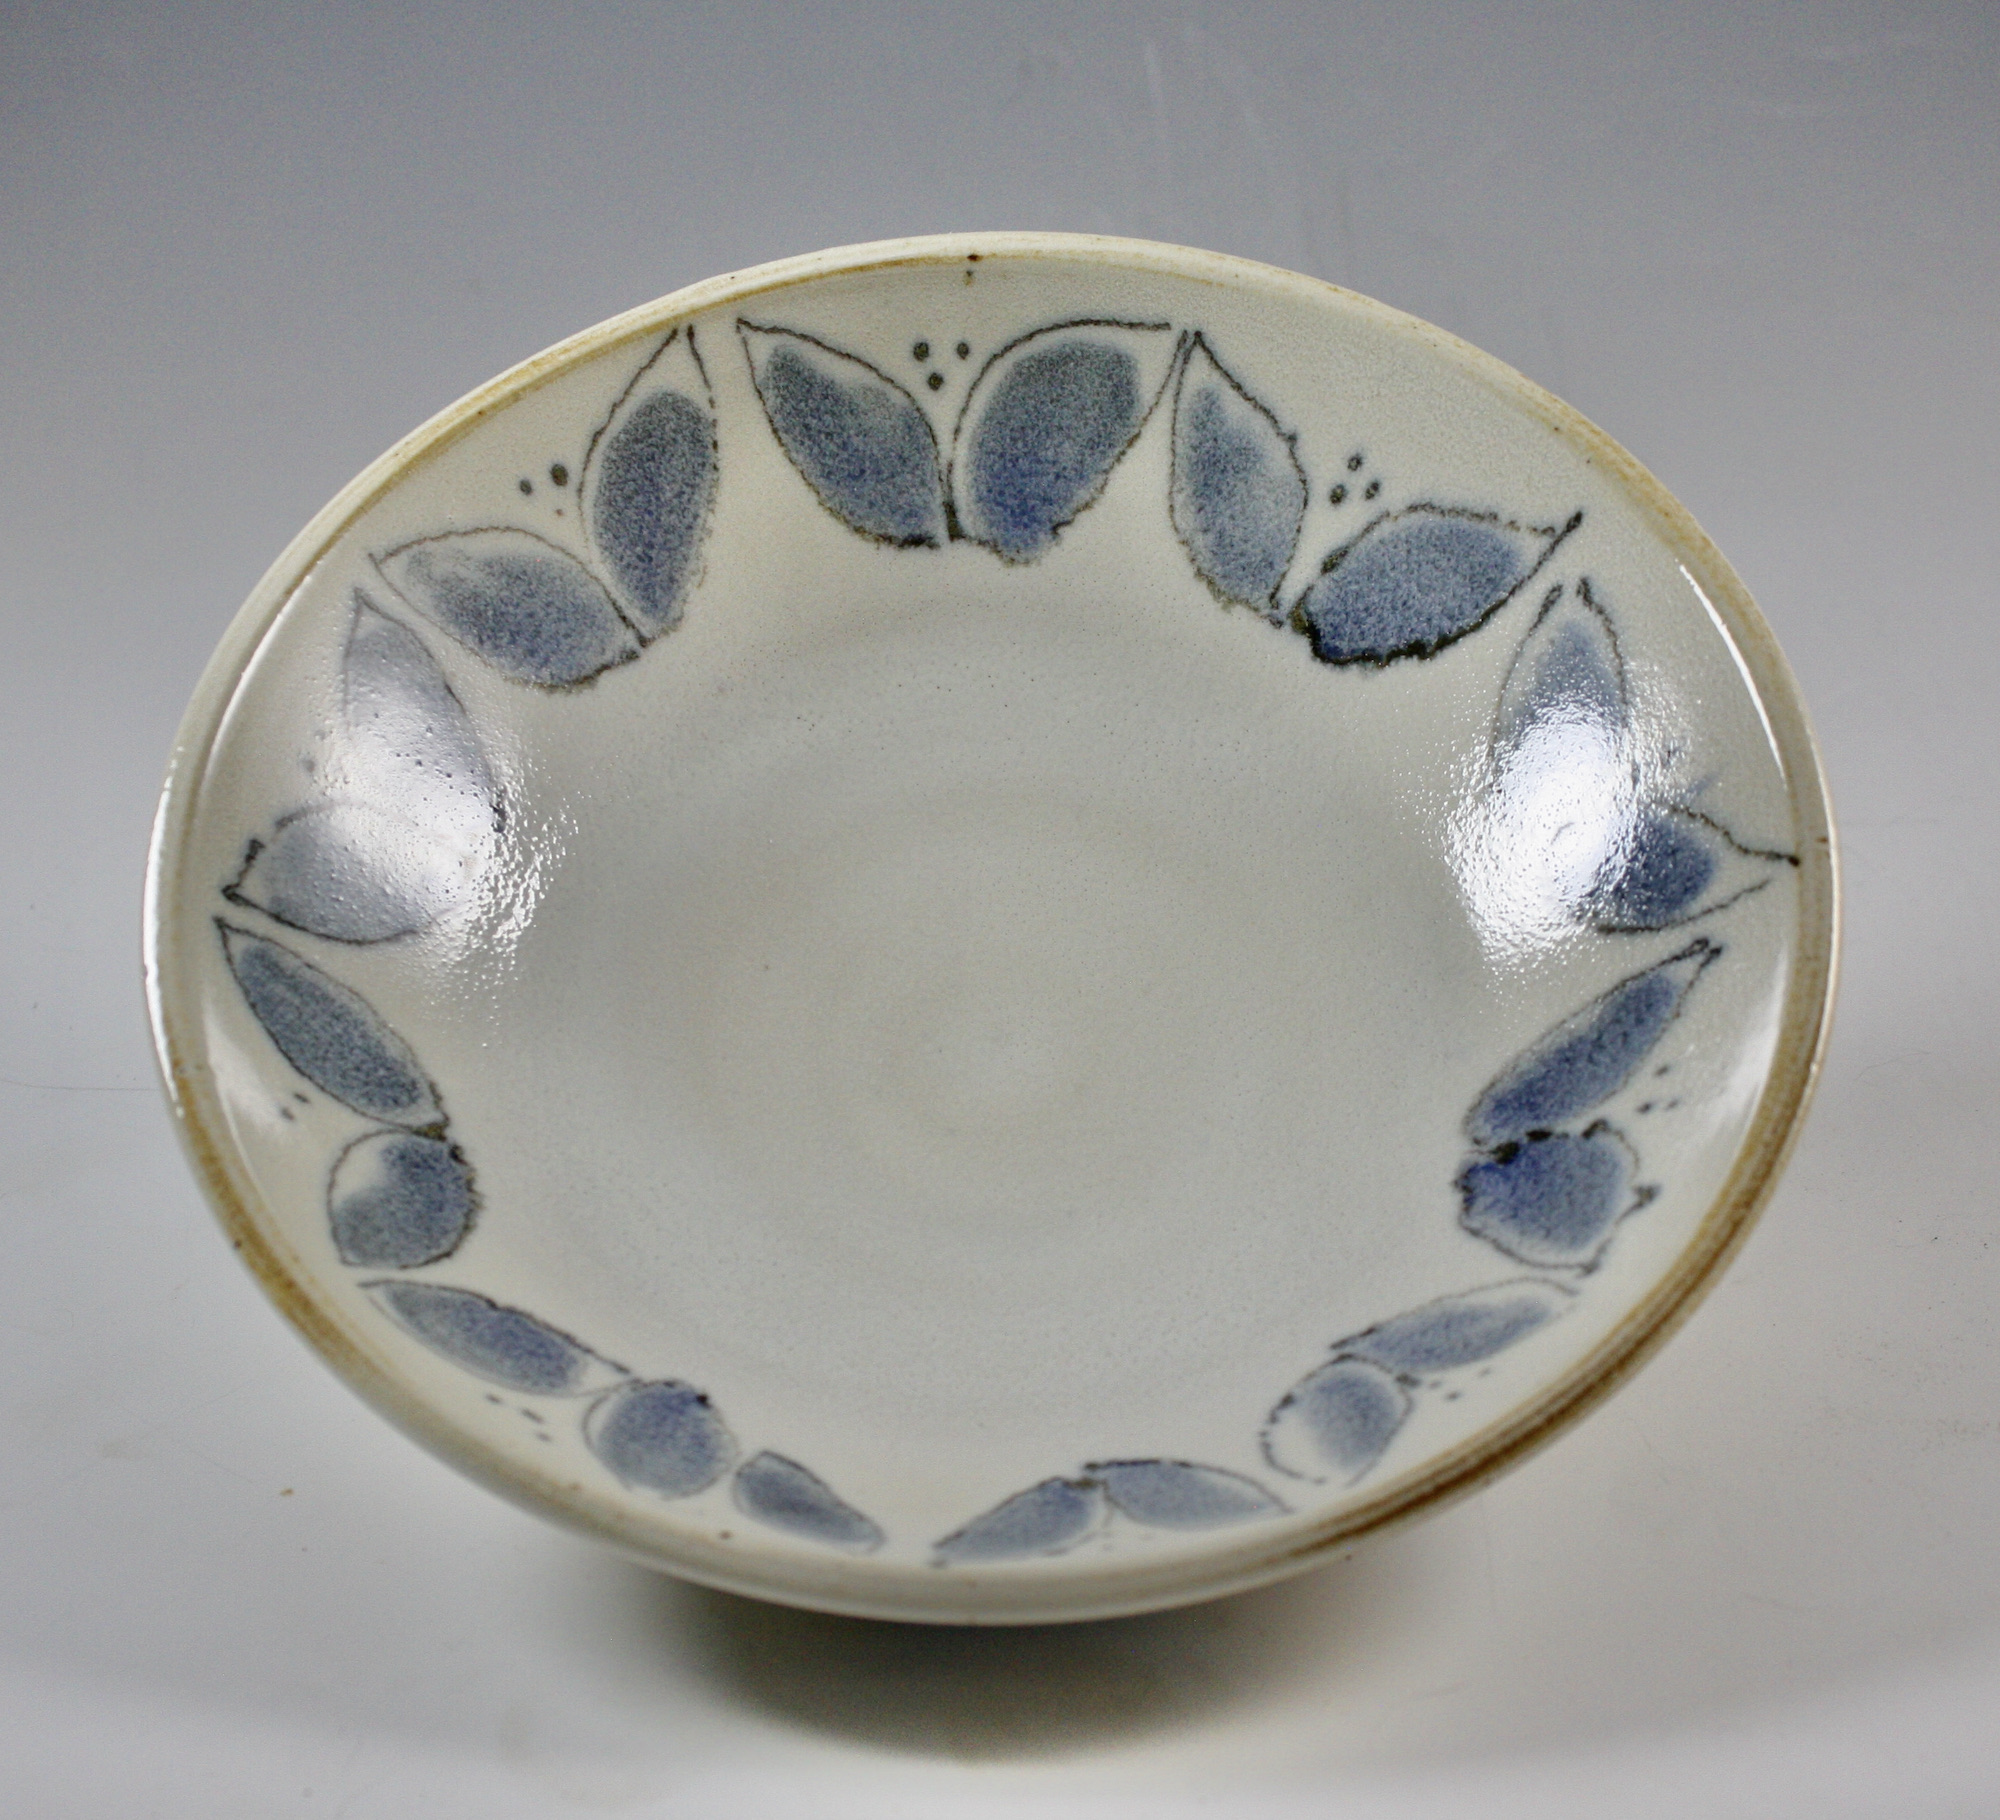 White Bowl with Blue Leaf Design 21-121